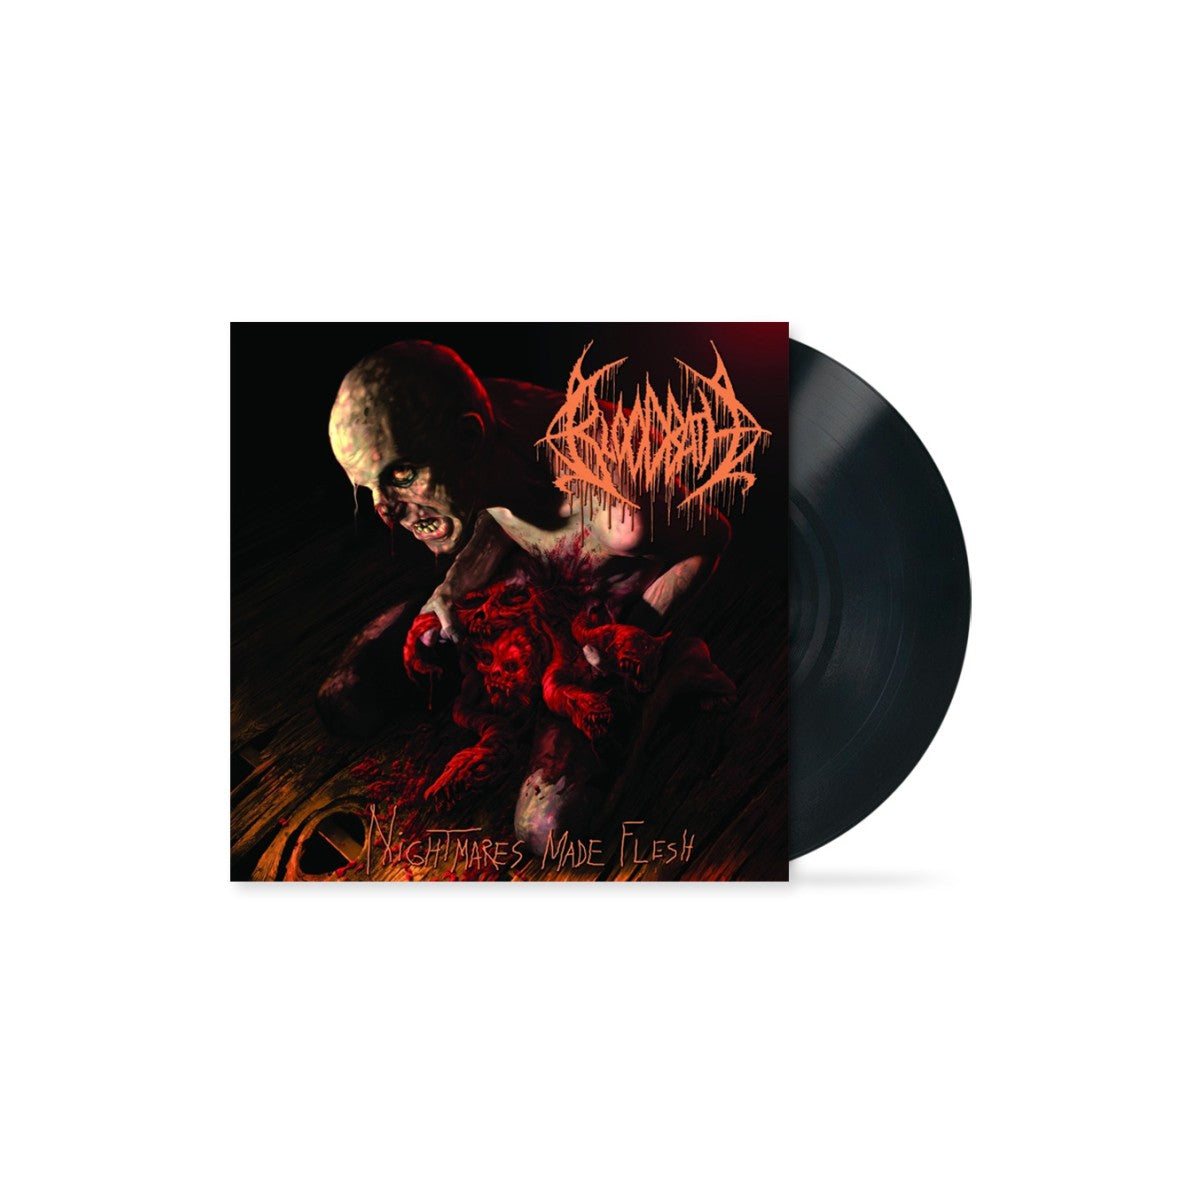 Bloodbath "Nightmares Made Flesh" Vinyl